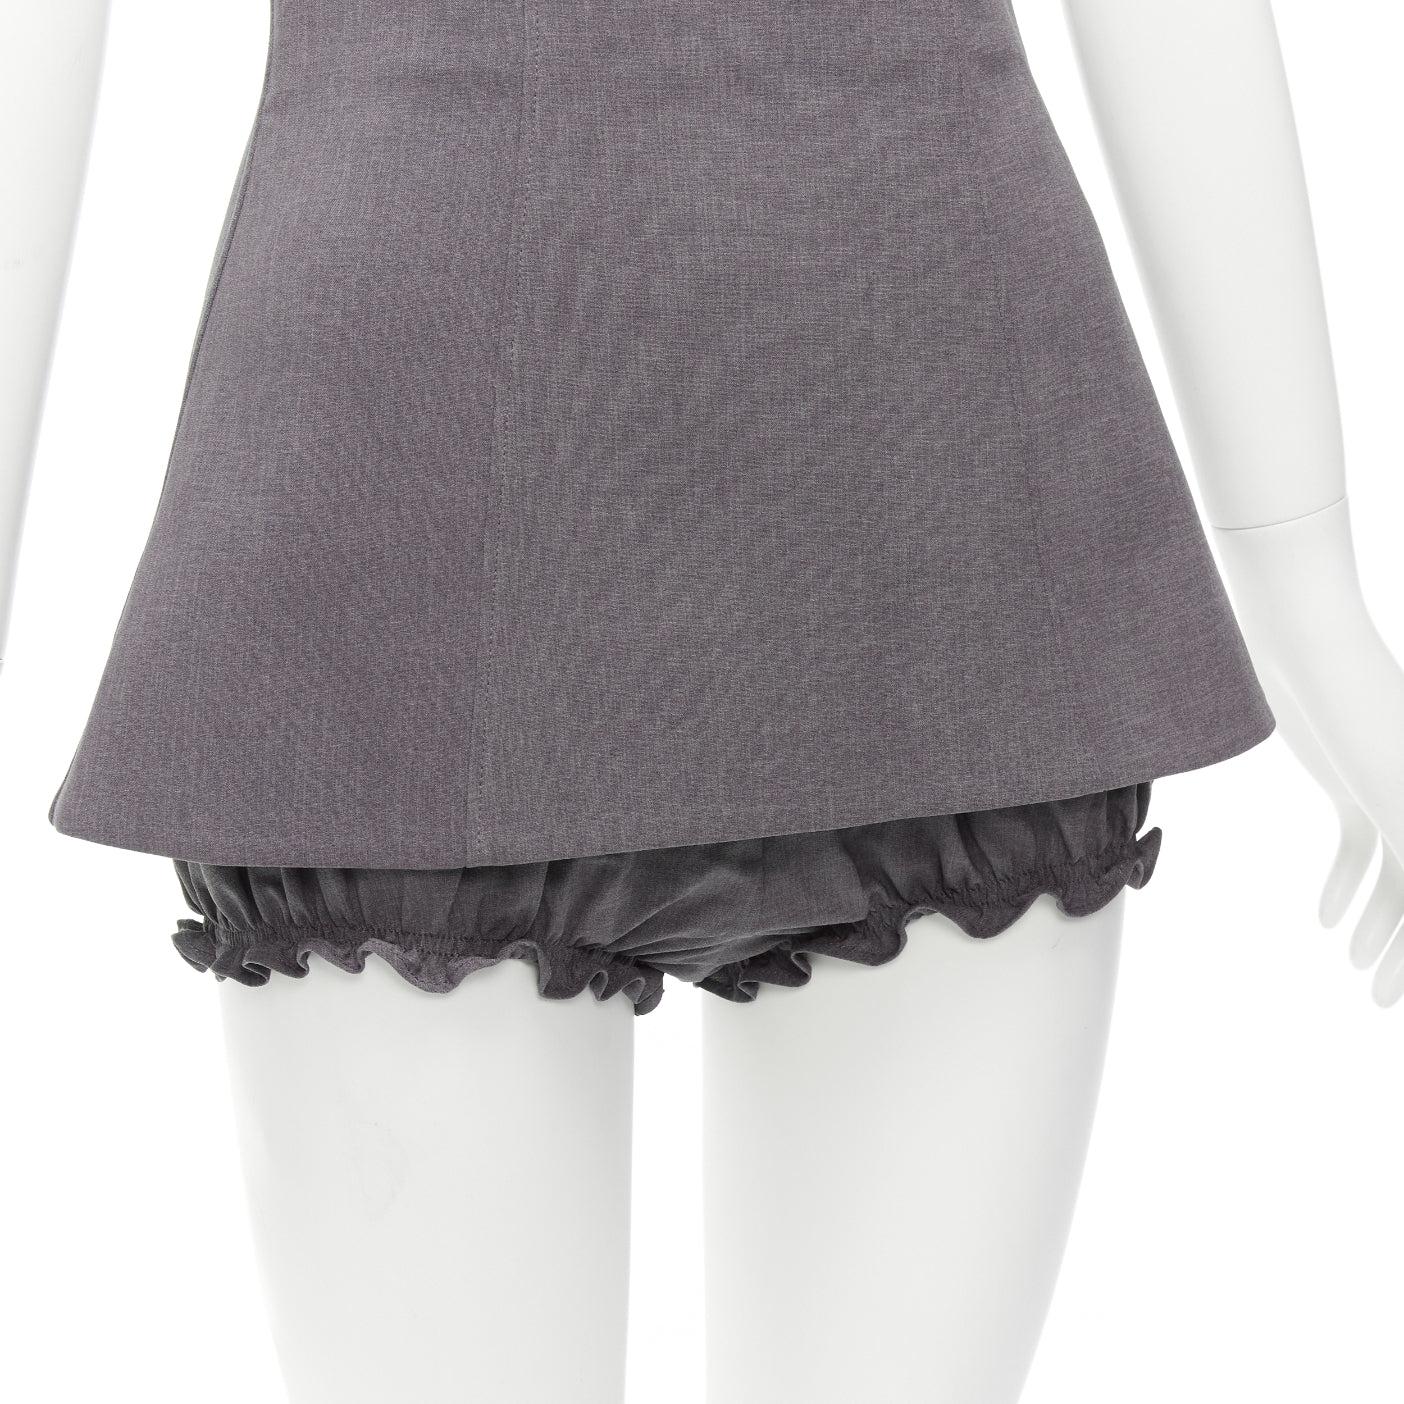 SHUSHU TONG grey ruffle skirt overlay high waisted layered shorts UK6 XS For Sale 3